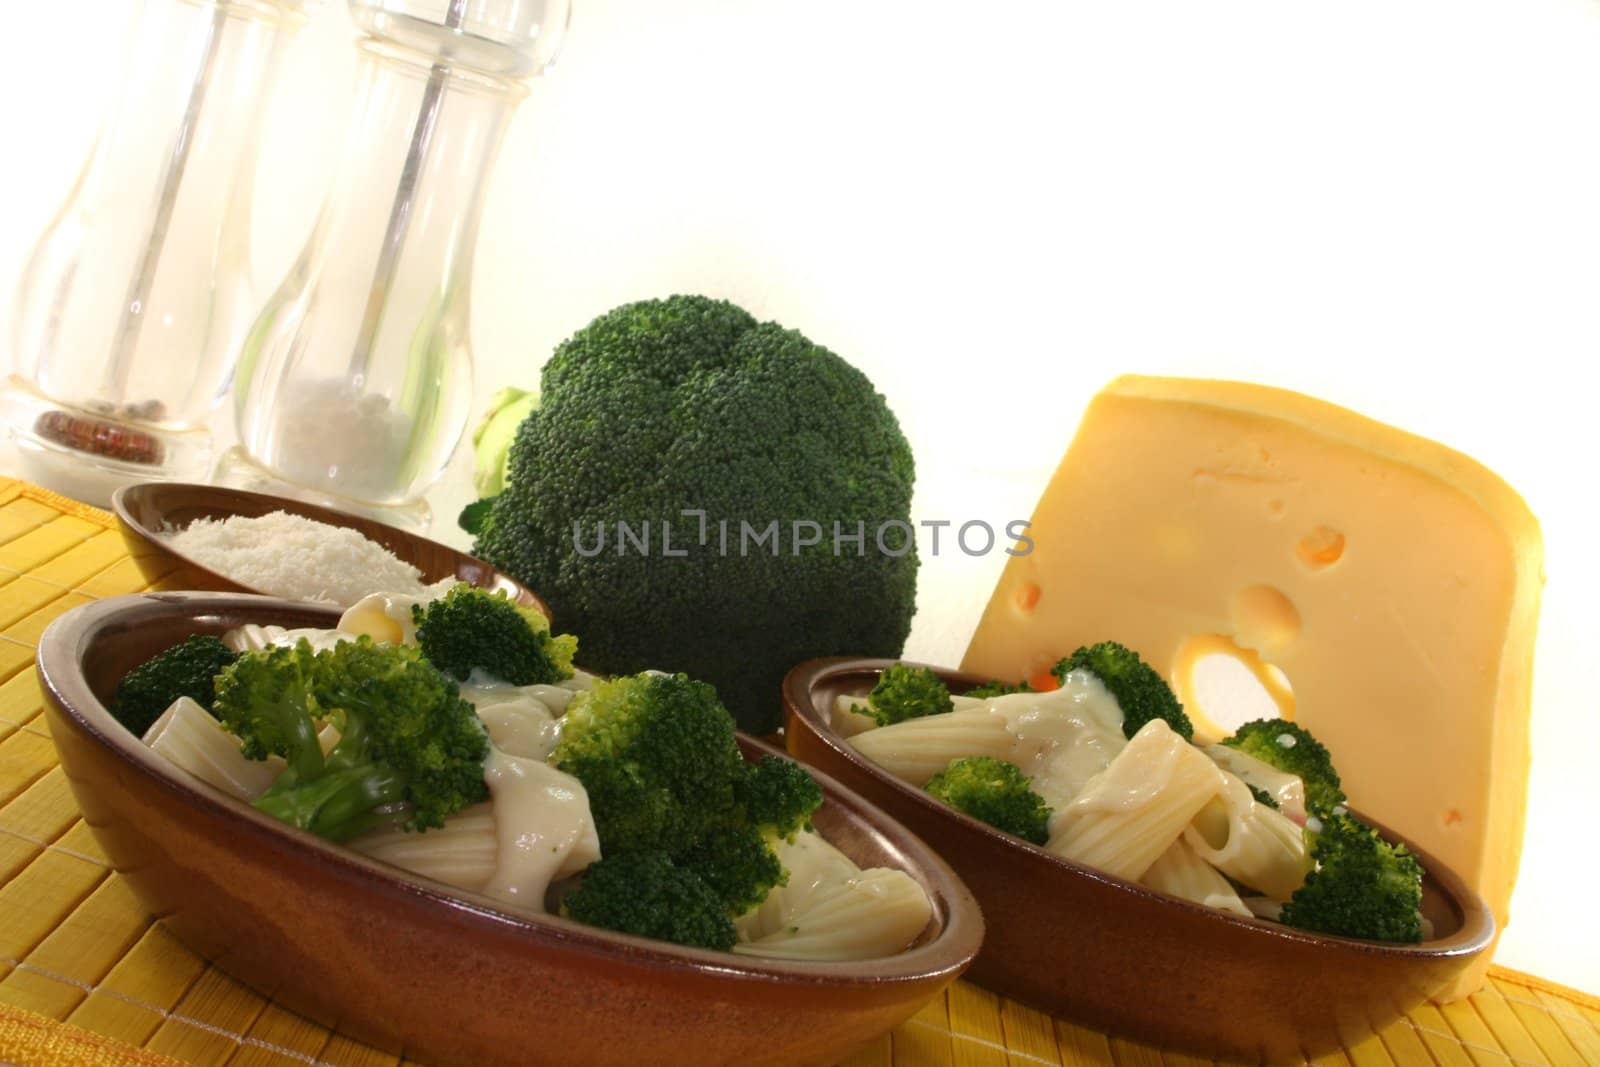 Tortiglione with broccoli by discovery